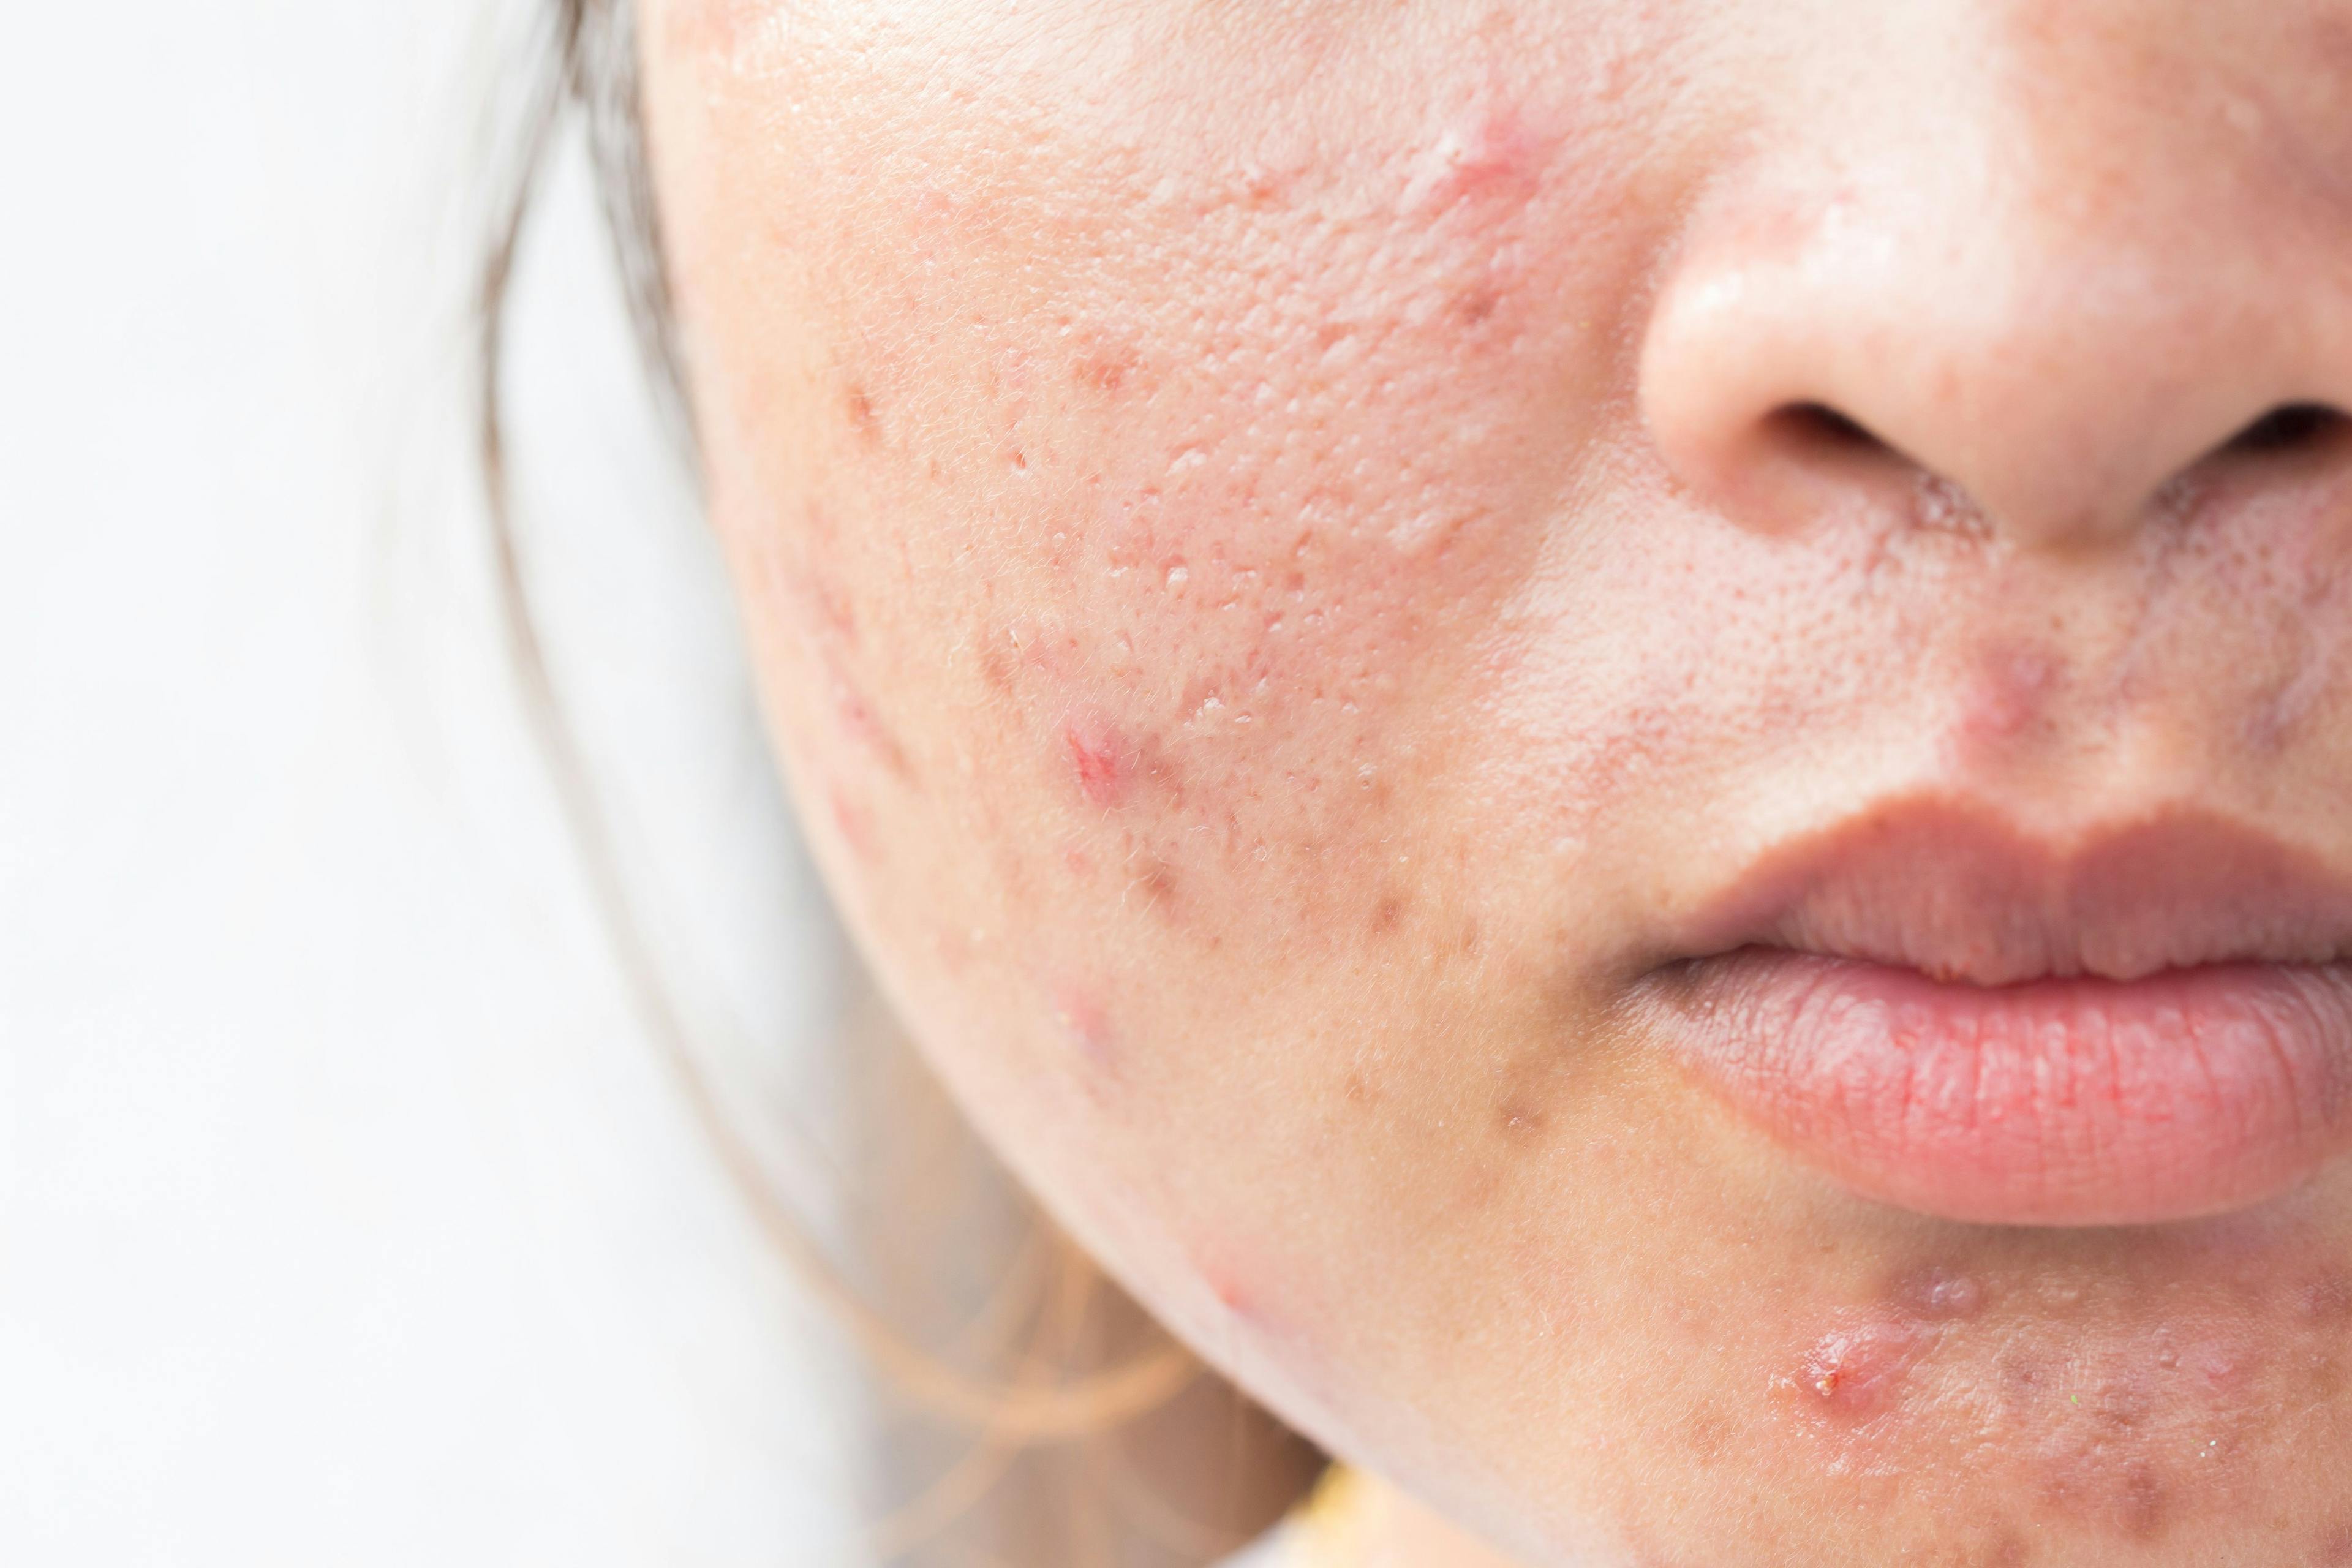 acne scarring | Image credit: frank29052515 - stock.adobe.com